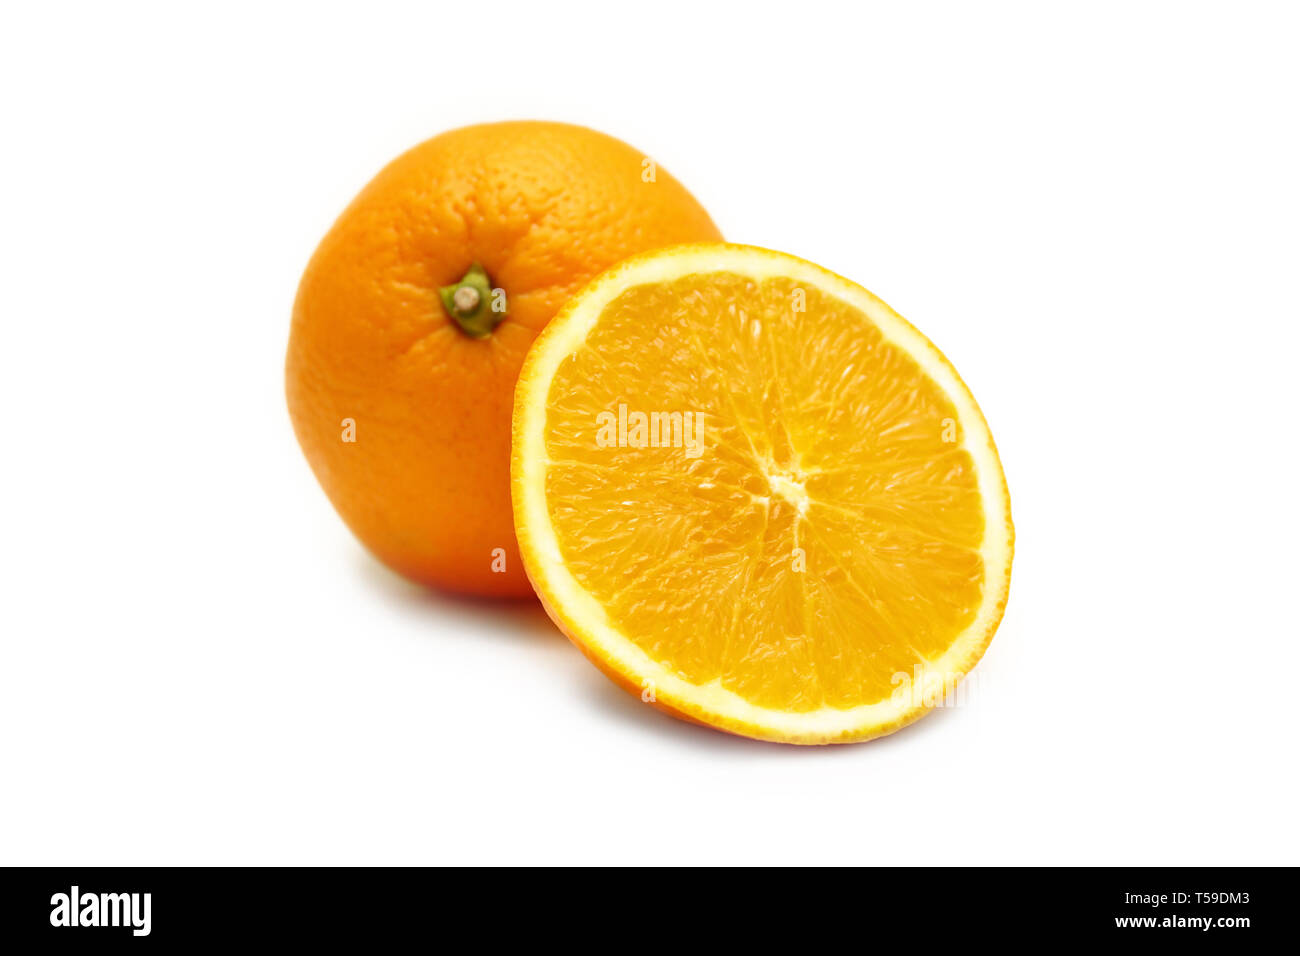 Two oranges on a white background Stock Photo